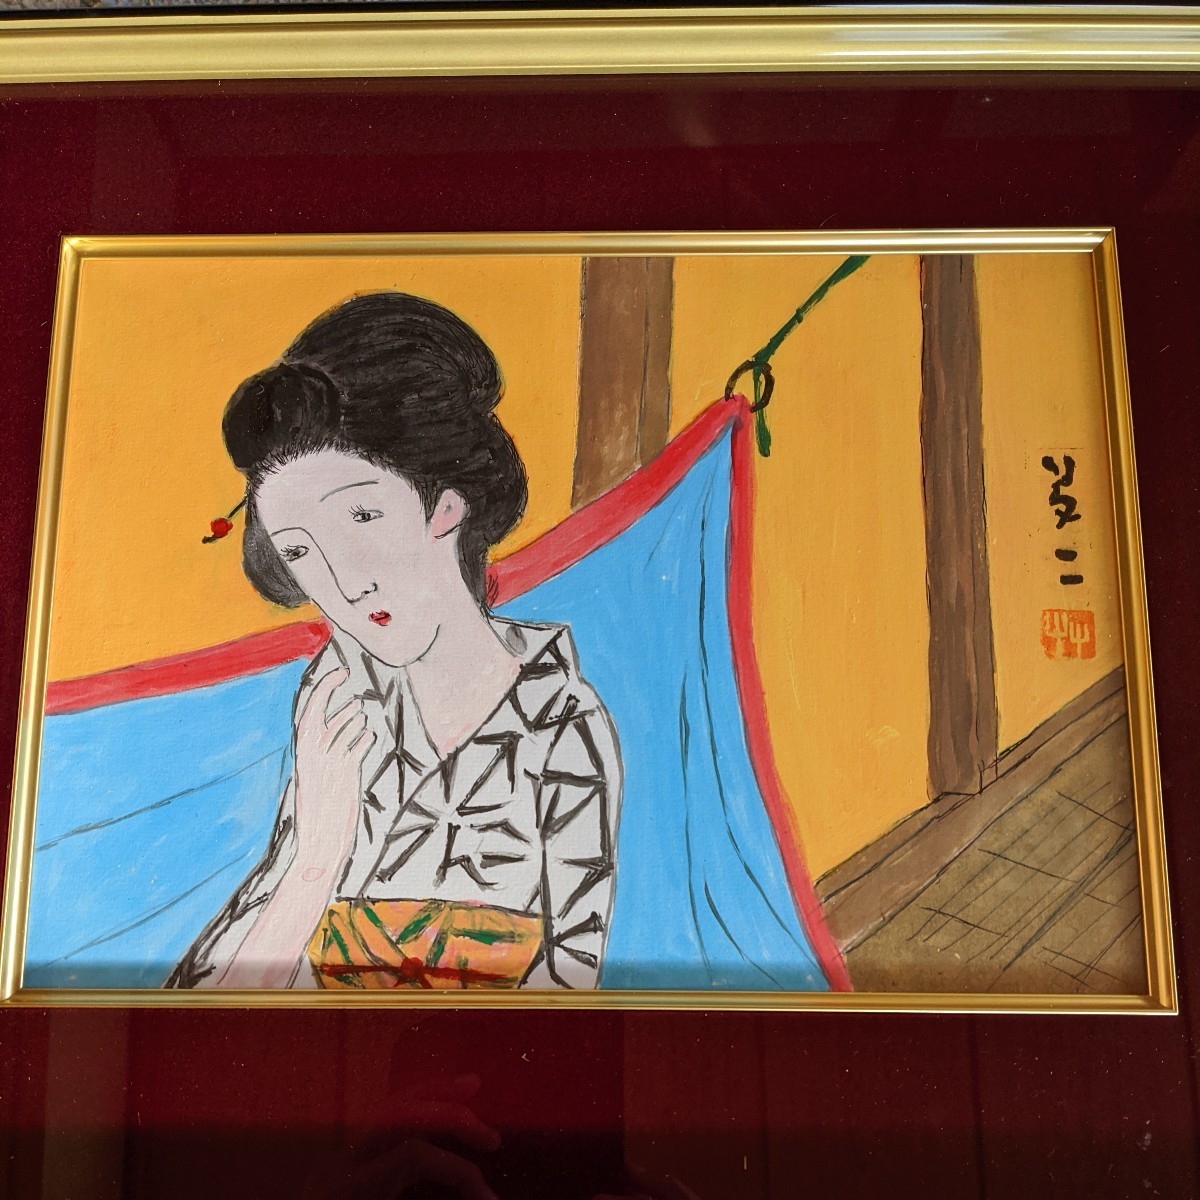 [Копия] Юмэдзи Такехиса Юката Красота Картина, Рисование, Японская живопись, человек, Бодхисаттва